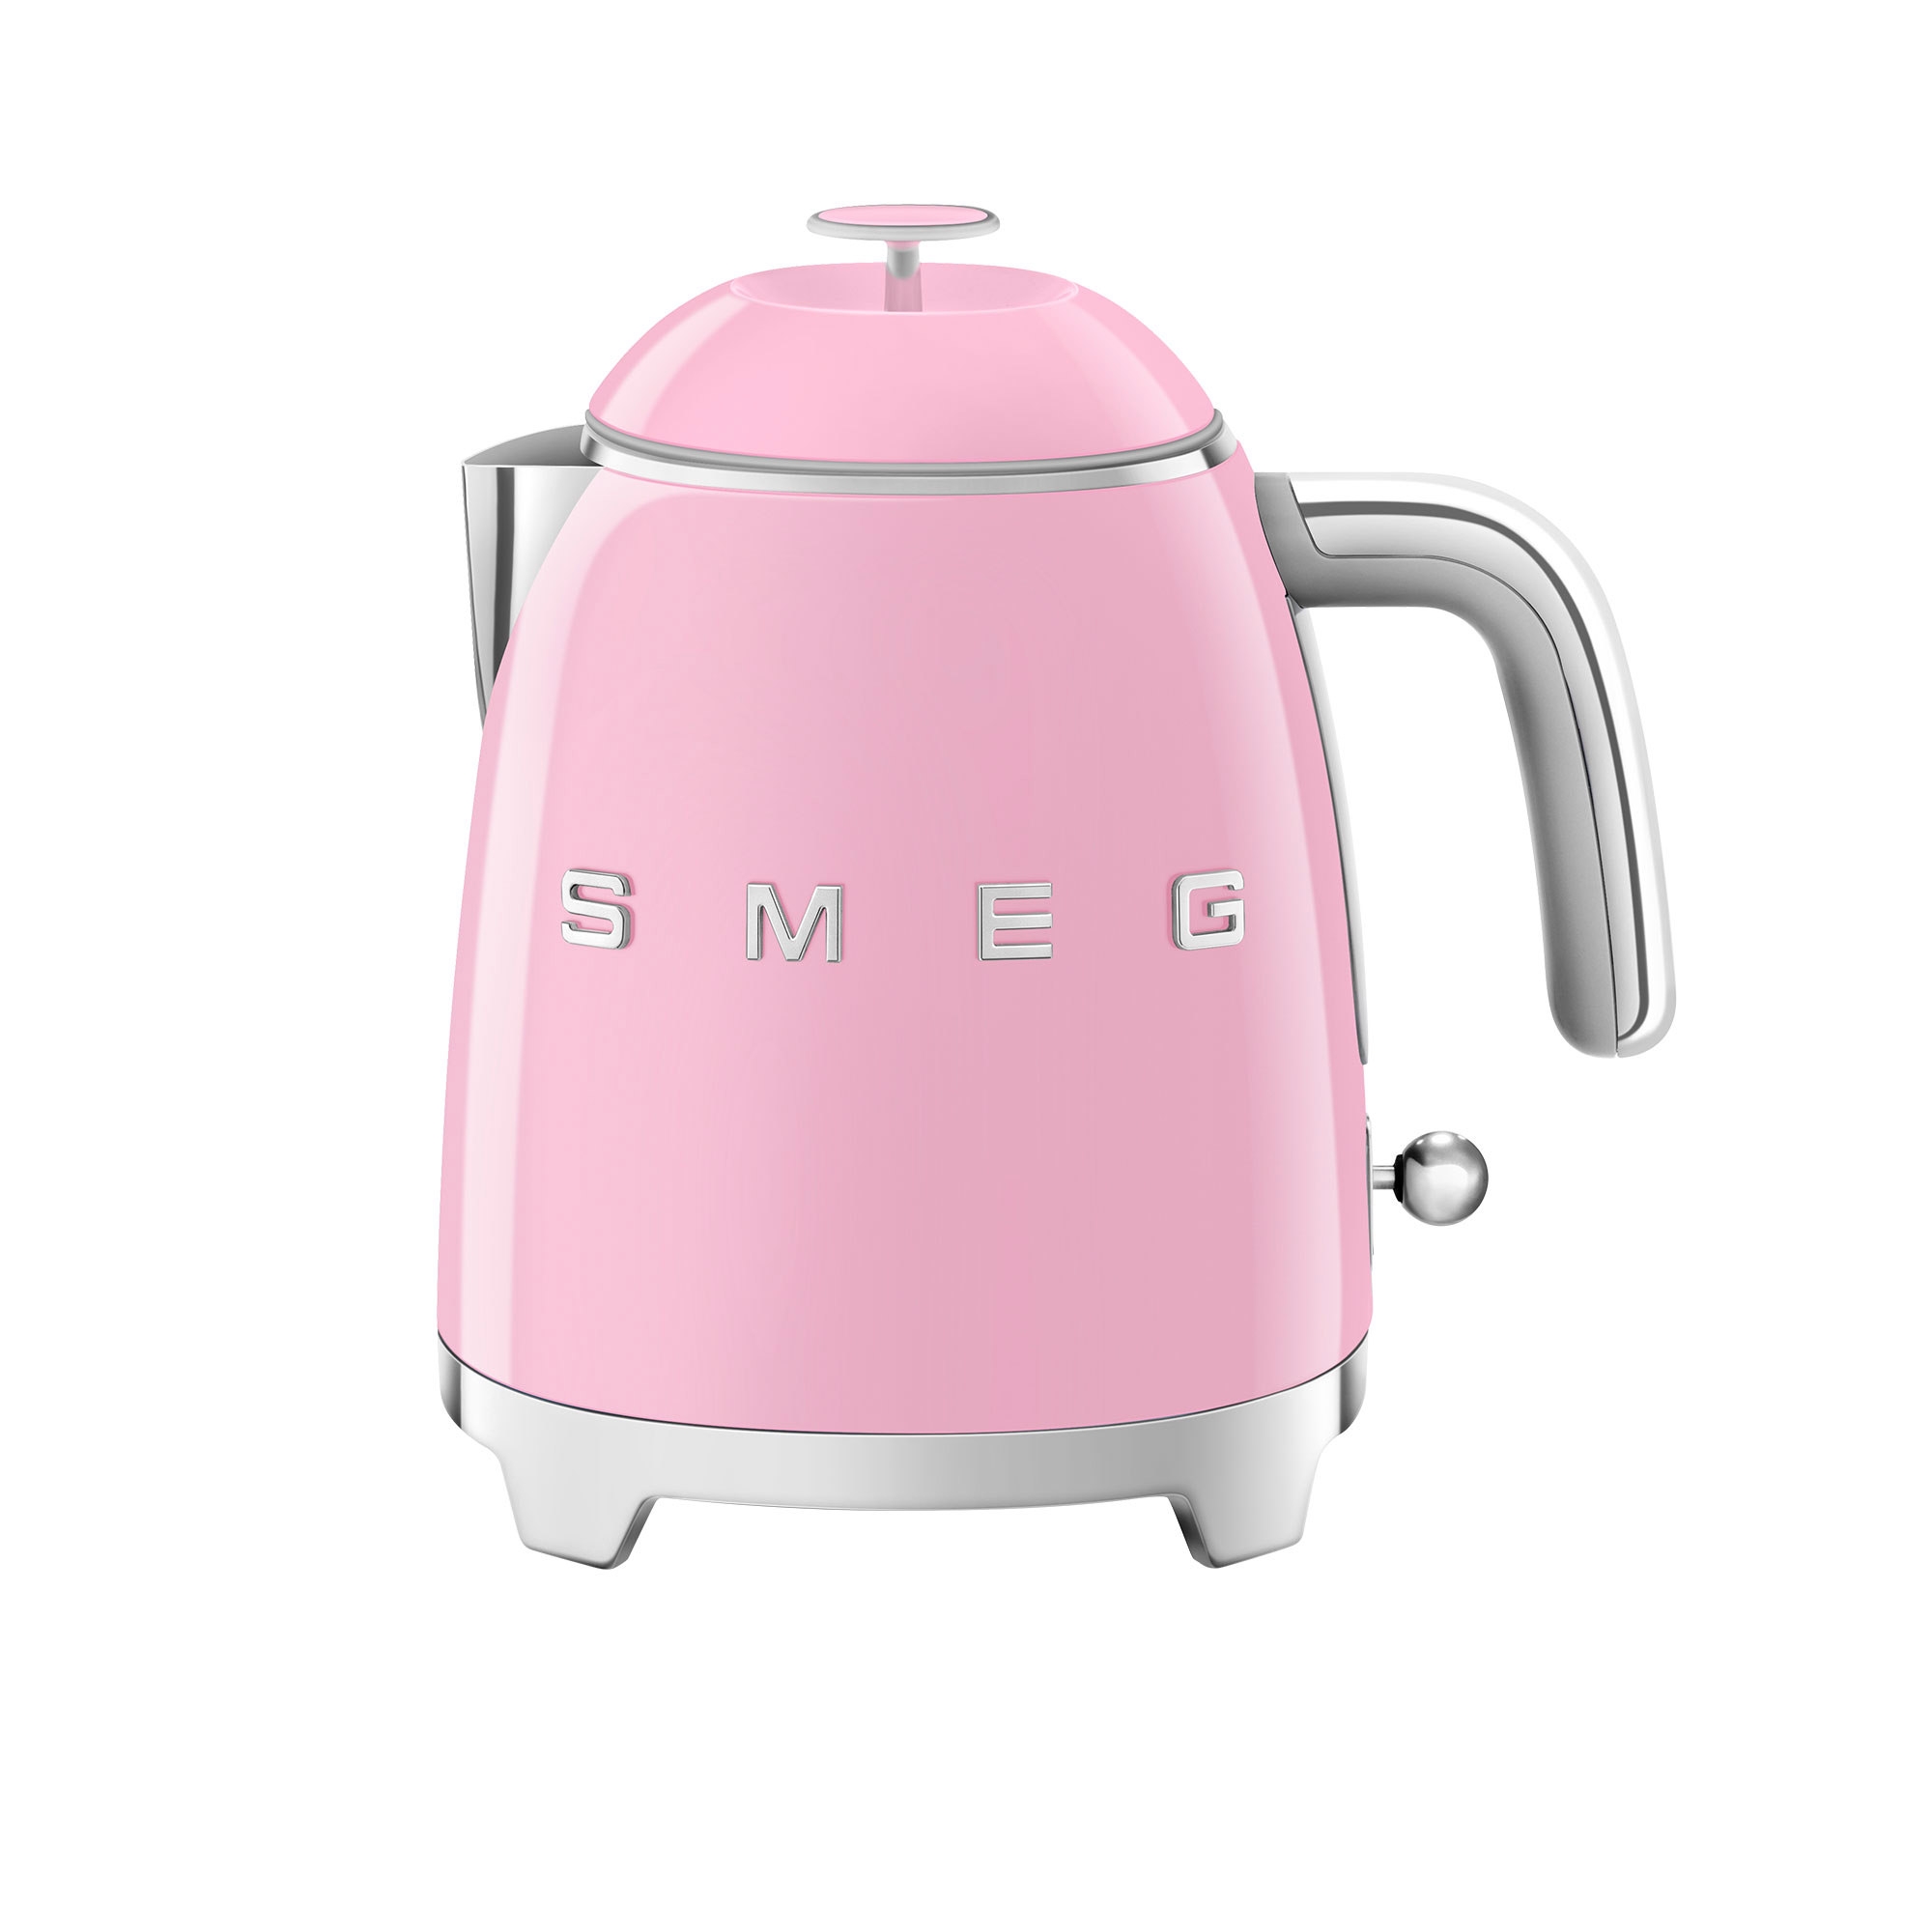 Smeg 50's Retro Style Mini Kettle 800ml Pastel Pink Image 1